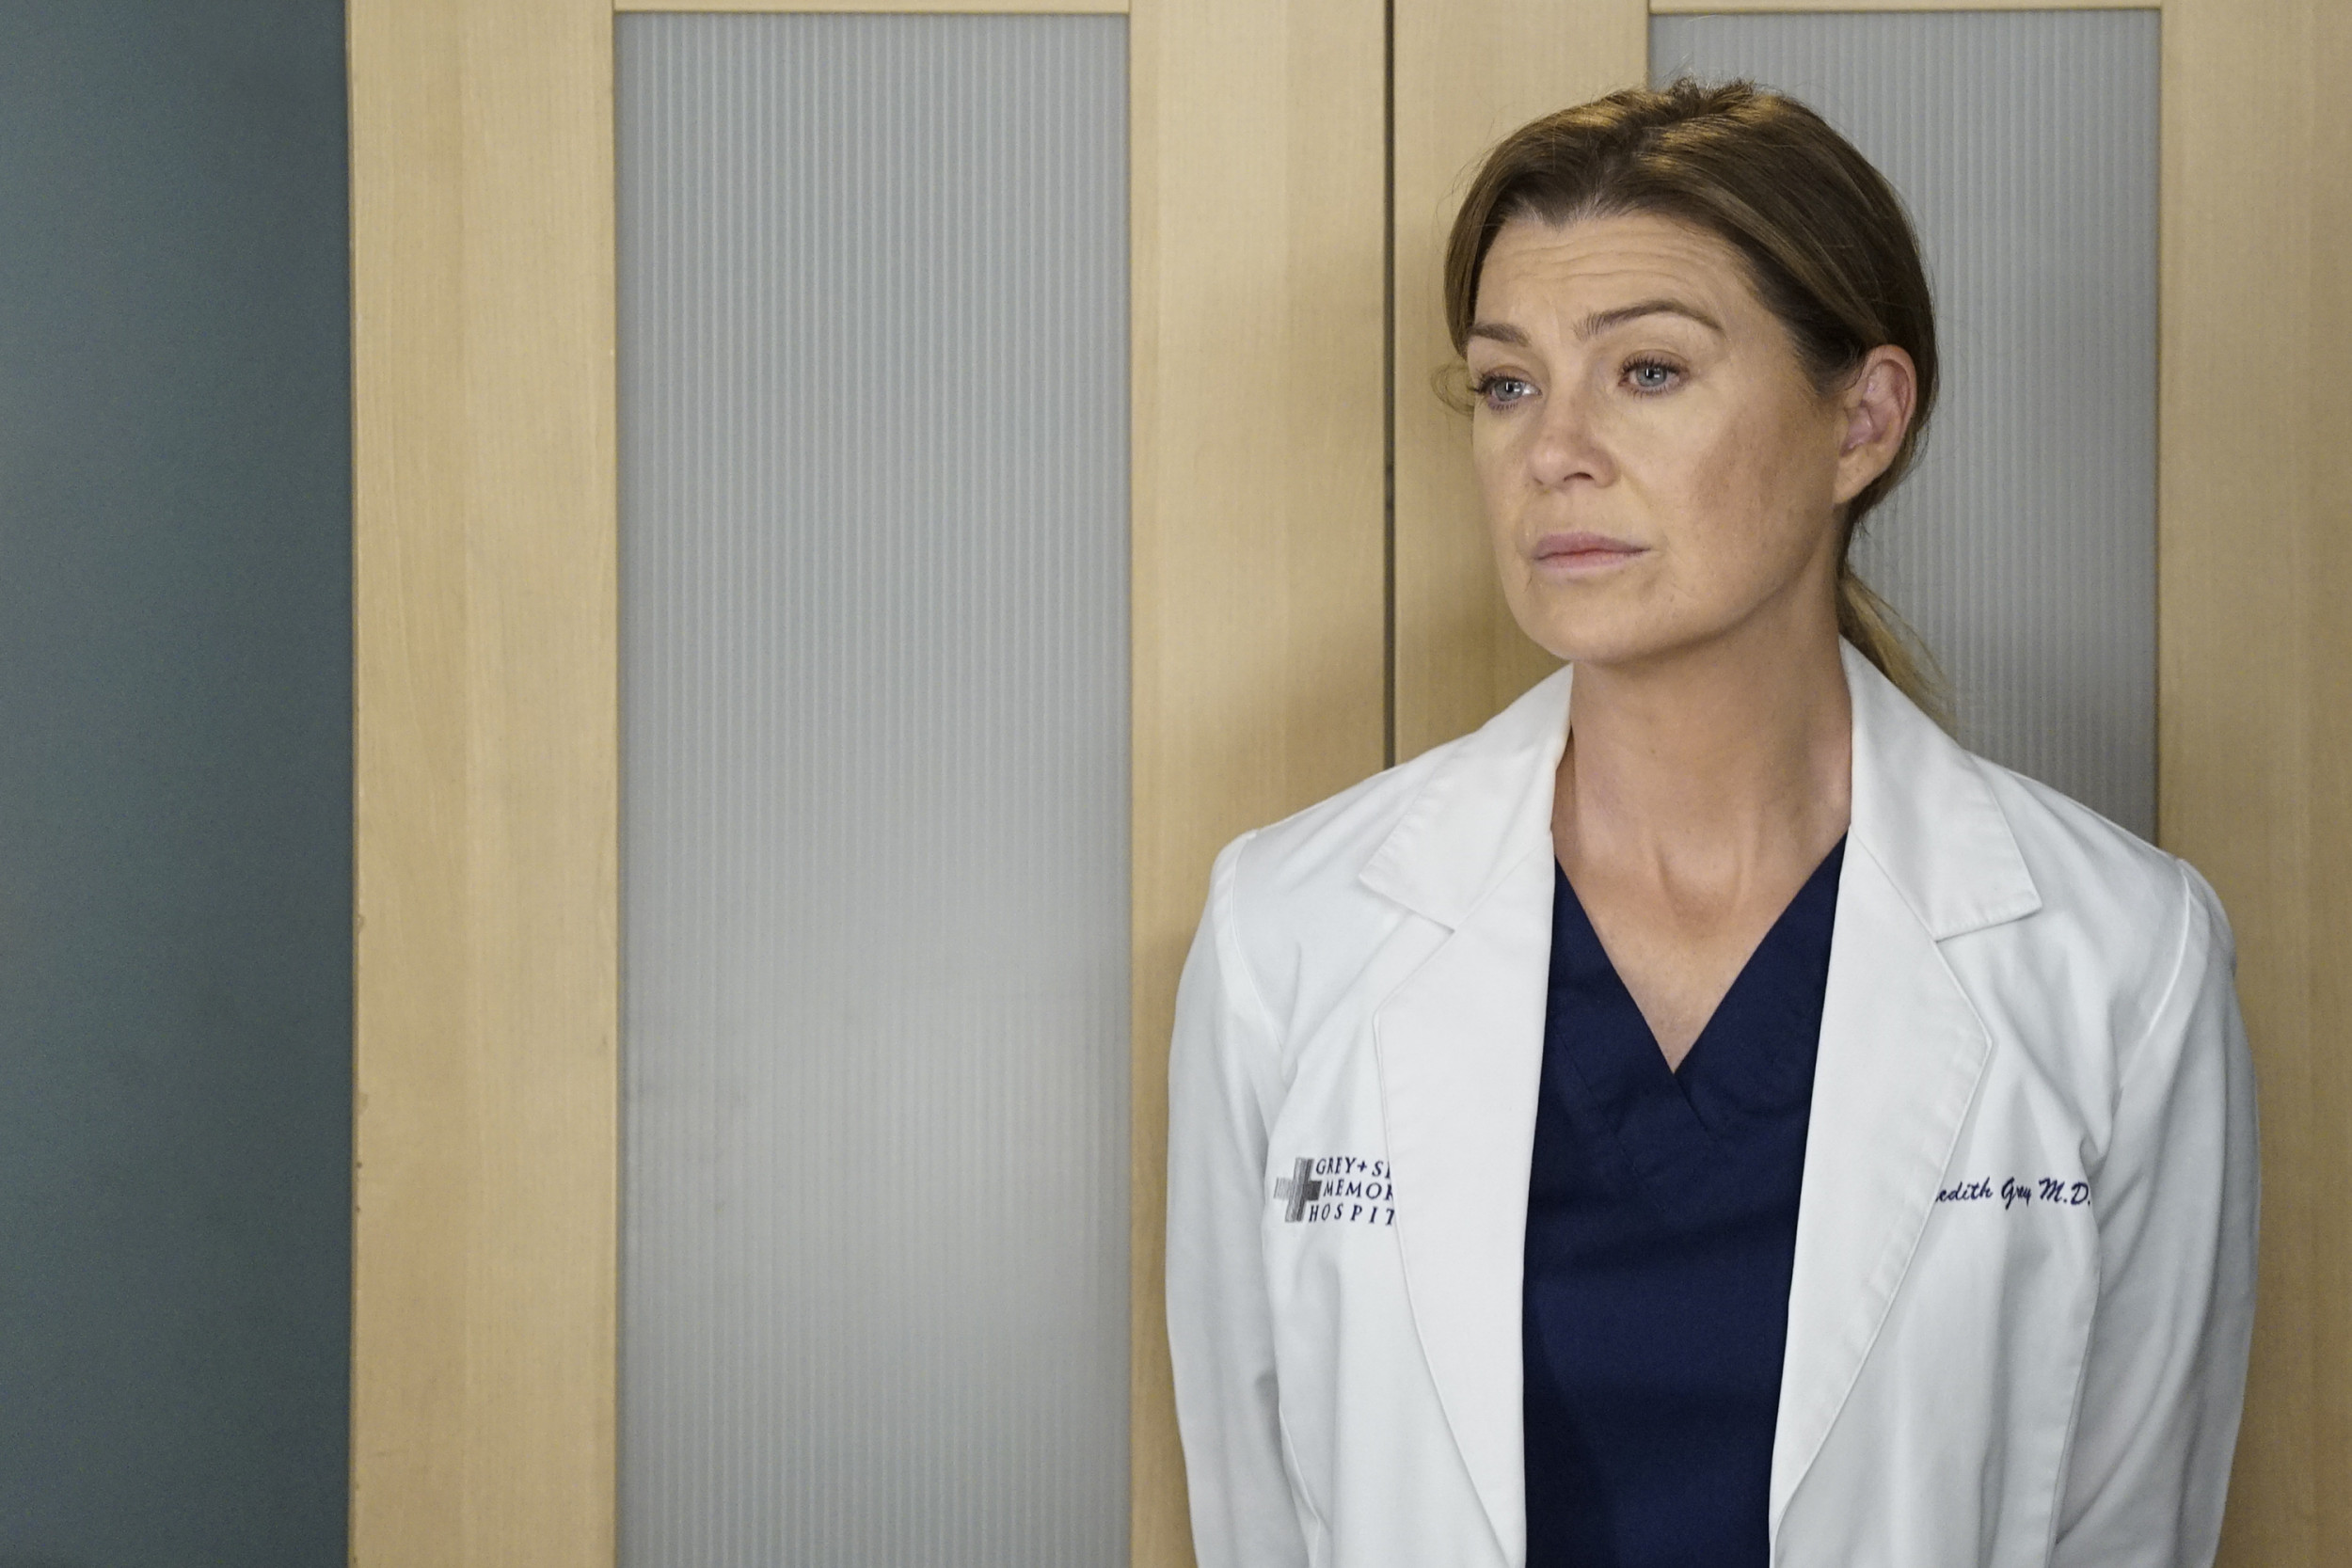 Grey S Anatomy Season 17 Episode 7 Release Date When The Show Returns